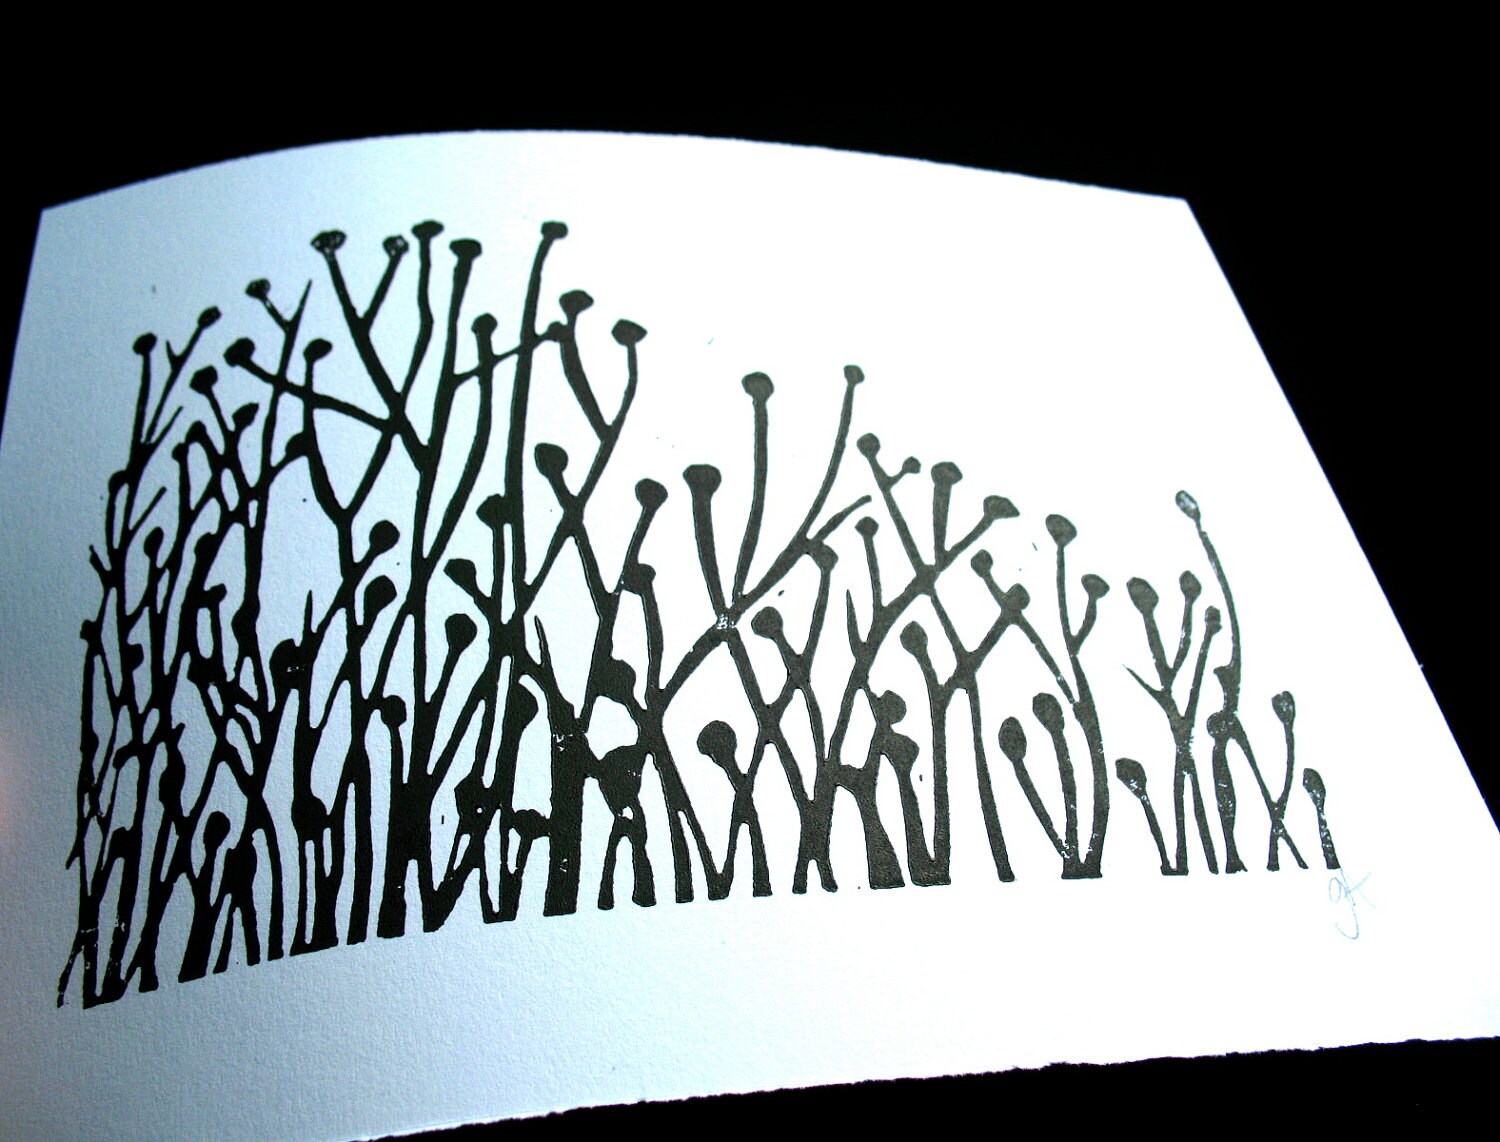 Linoleum Block Print Sunrise on the Mountains Minimal Black 8x10 Geometric  Scandinavian Linocut Print Sunset on the Mountains and Sea 